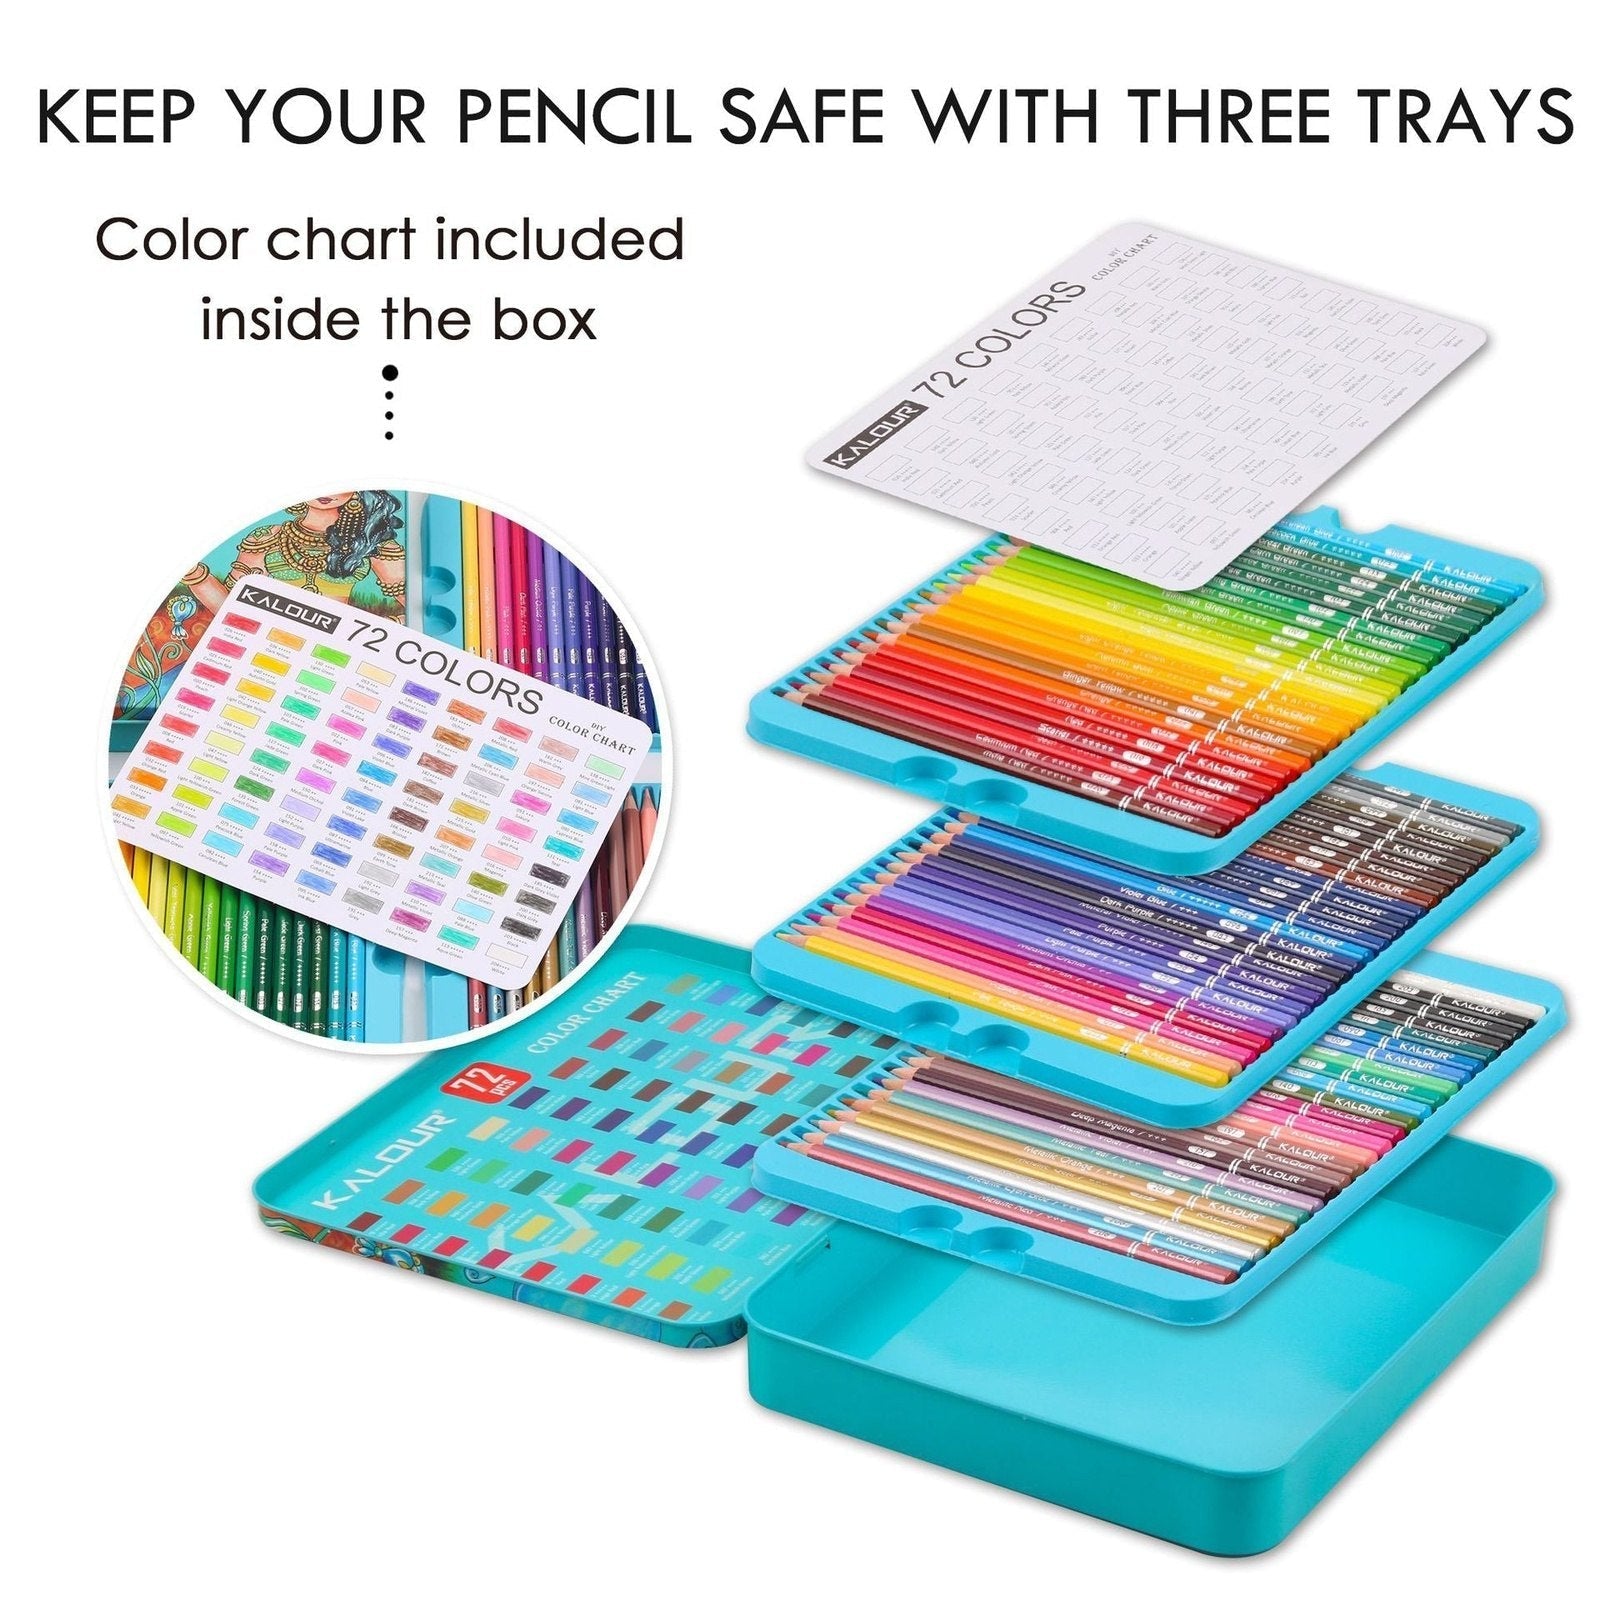 KALOUR Professional Drawing 120 Coloured Pencil Set – Craft Outlet